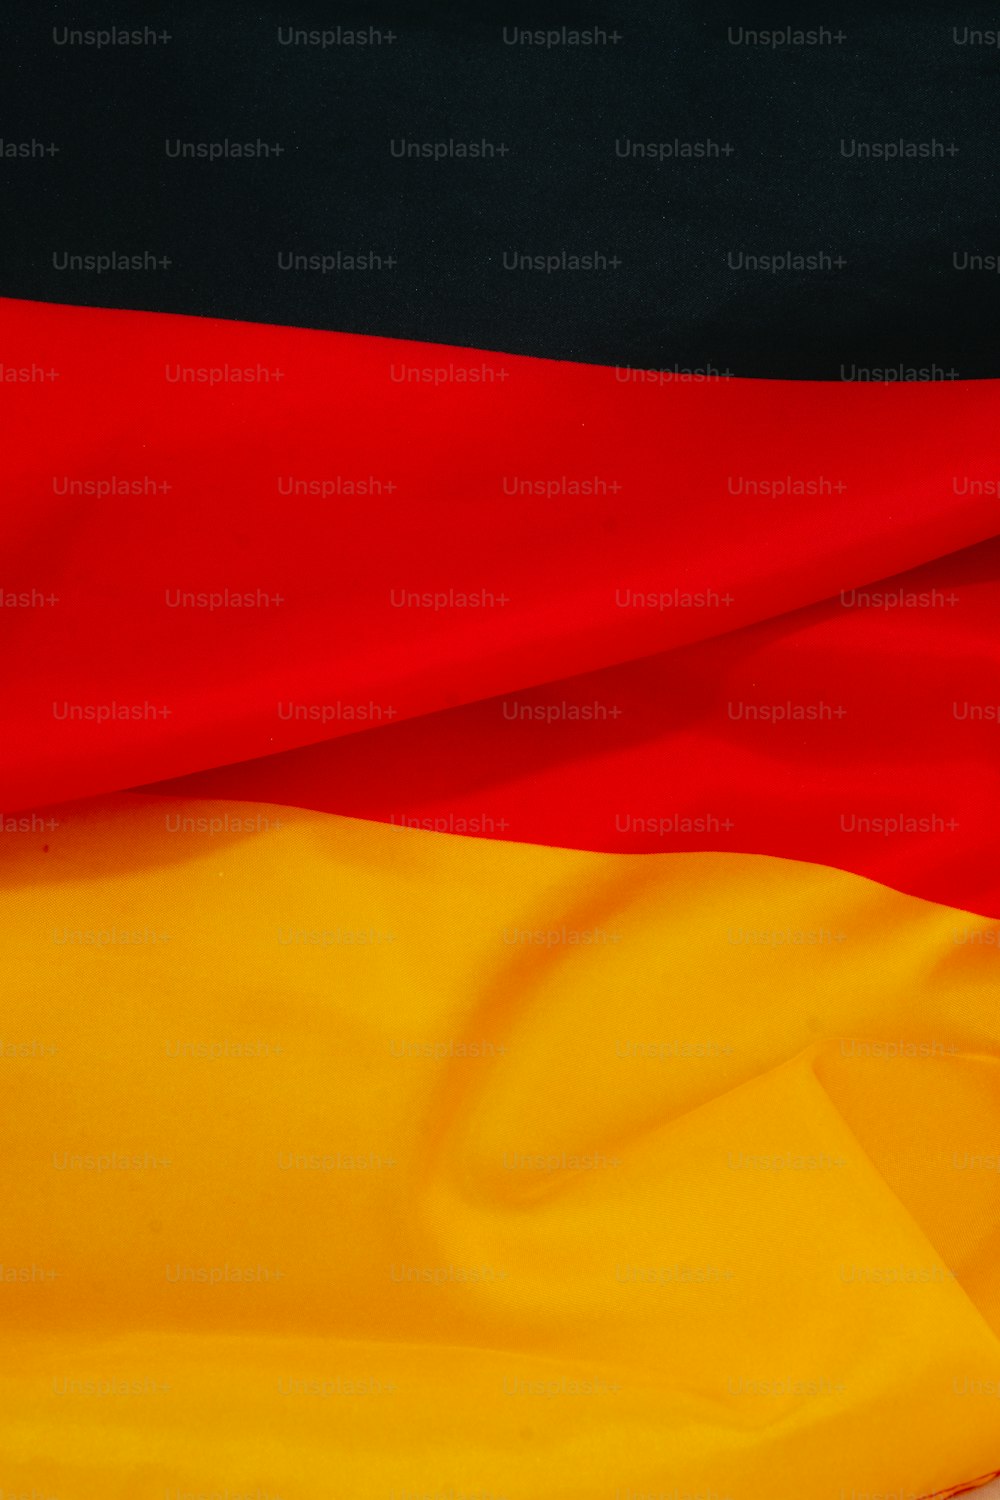 Deutschland Flagge Pictures  Download Free Images on Unsplash